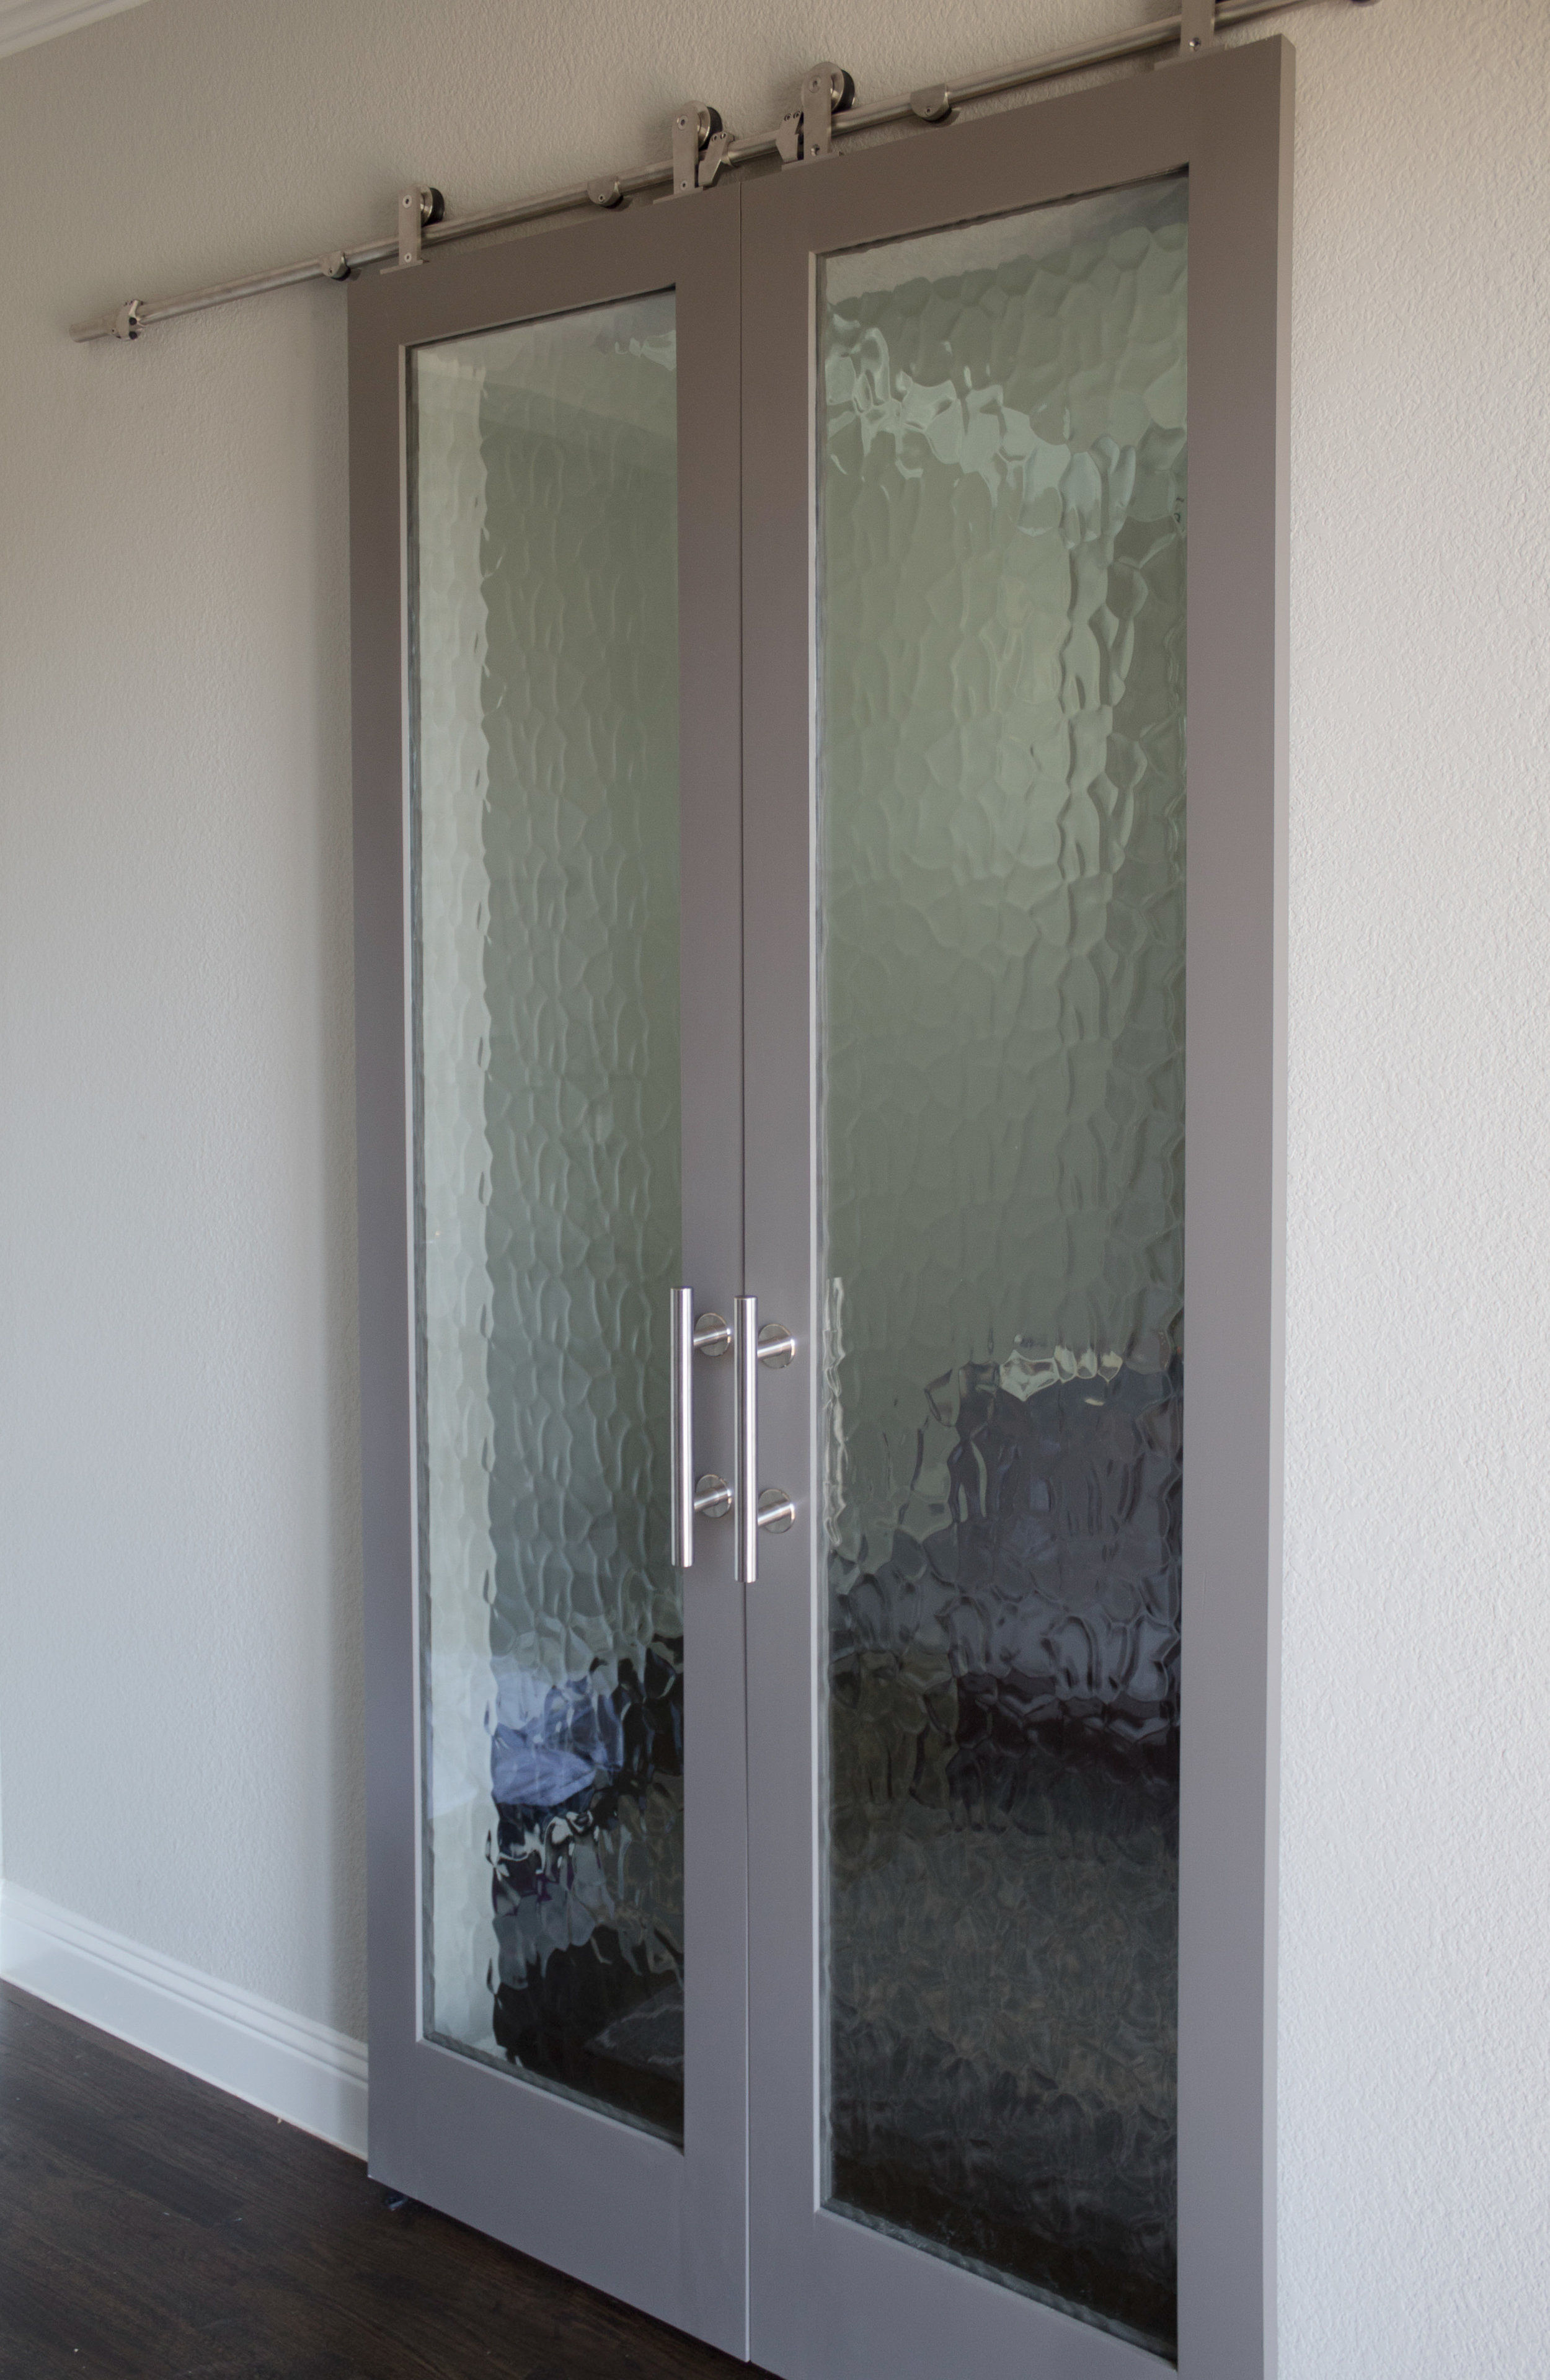 Flemish Glass With Gray Border (Double Barn Door Hardware)